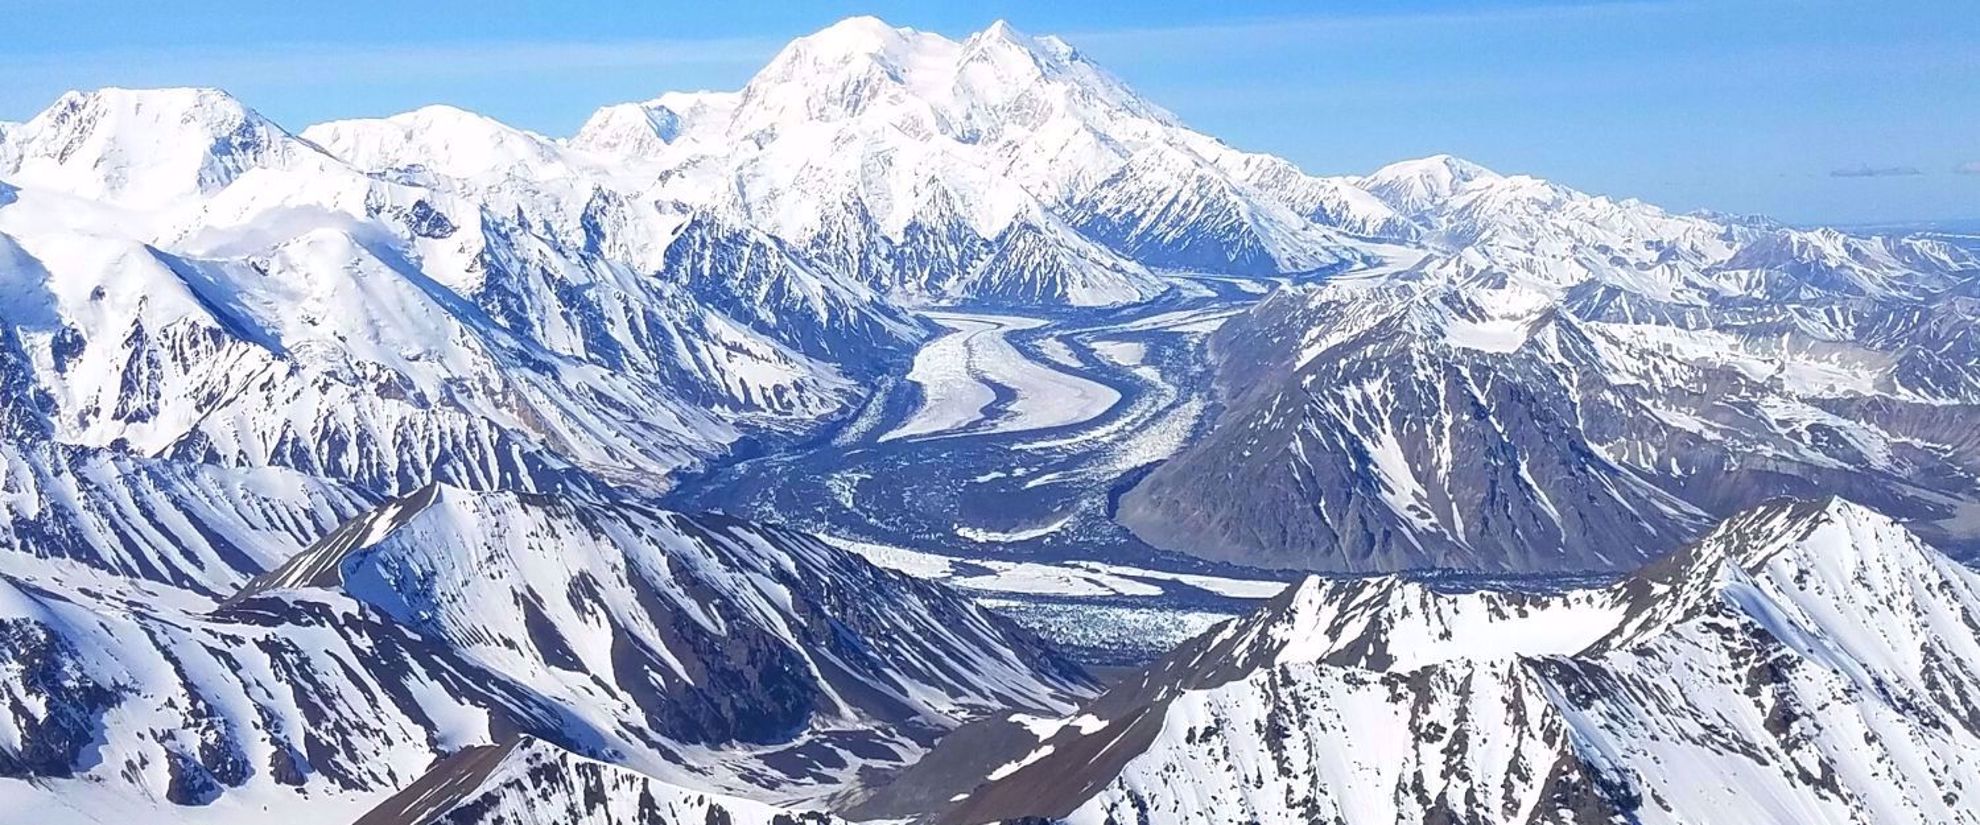 Snowy Alaskan mountain range from the air 